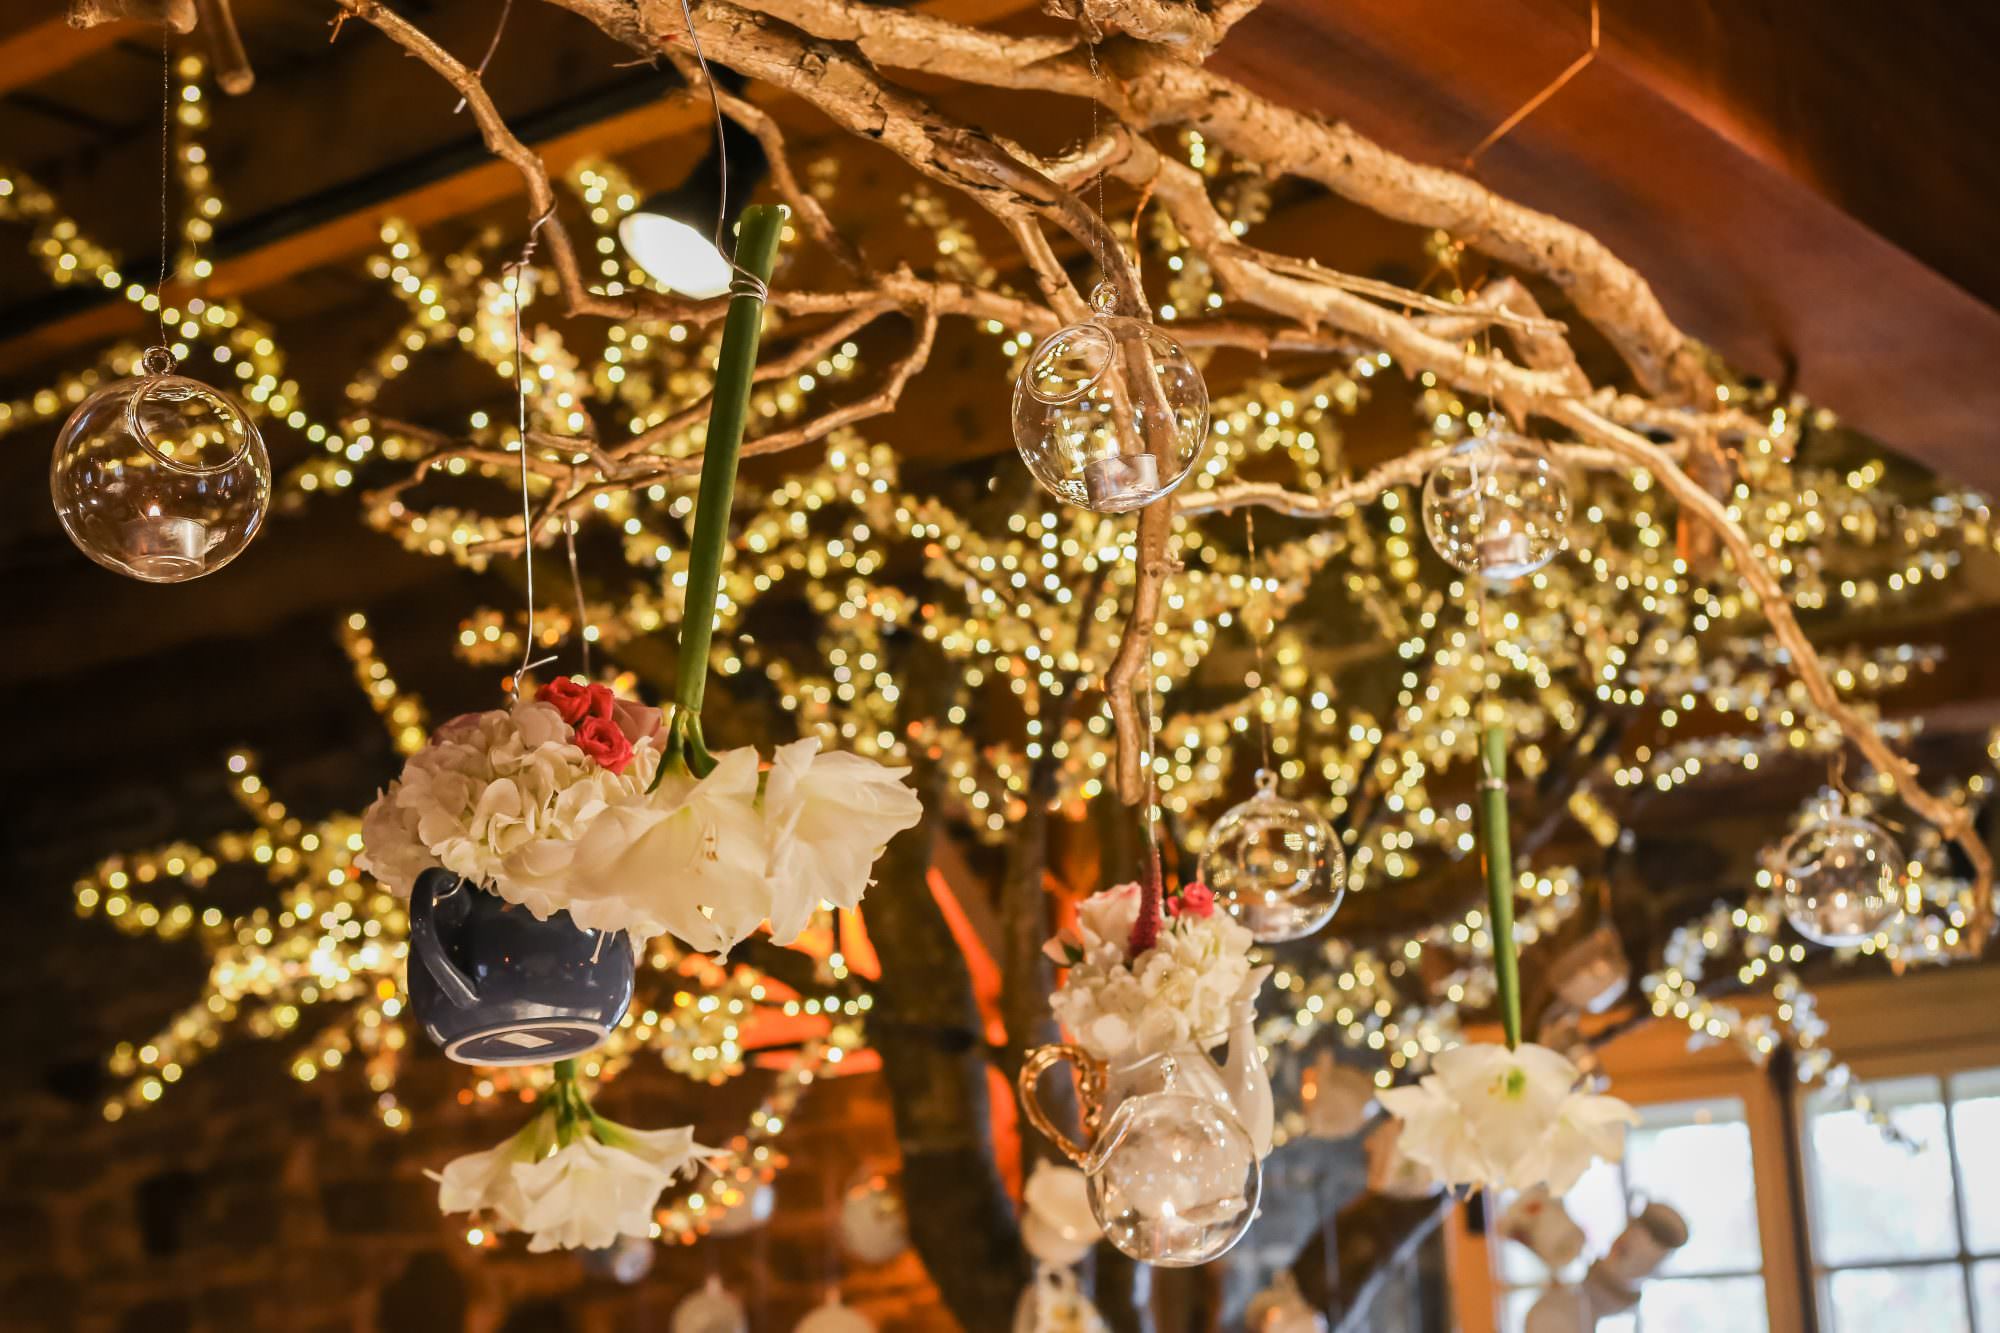 alain simon fleurs throwing petals details wedding montreal photographer planning creations maryse noel vielle brasserie alice wonderland tree hanging tea cups